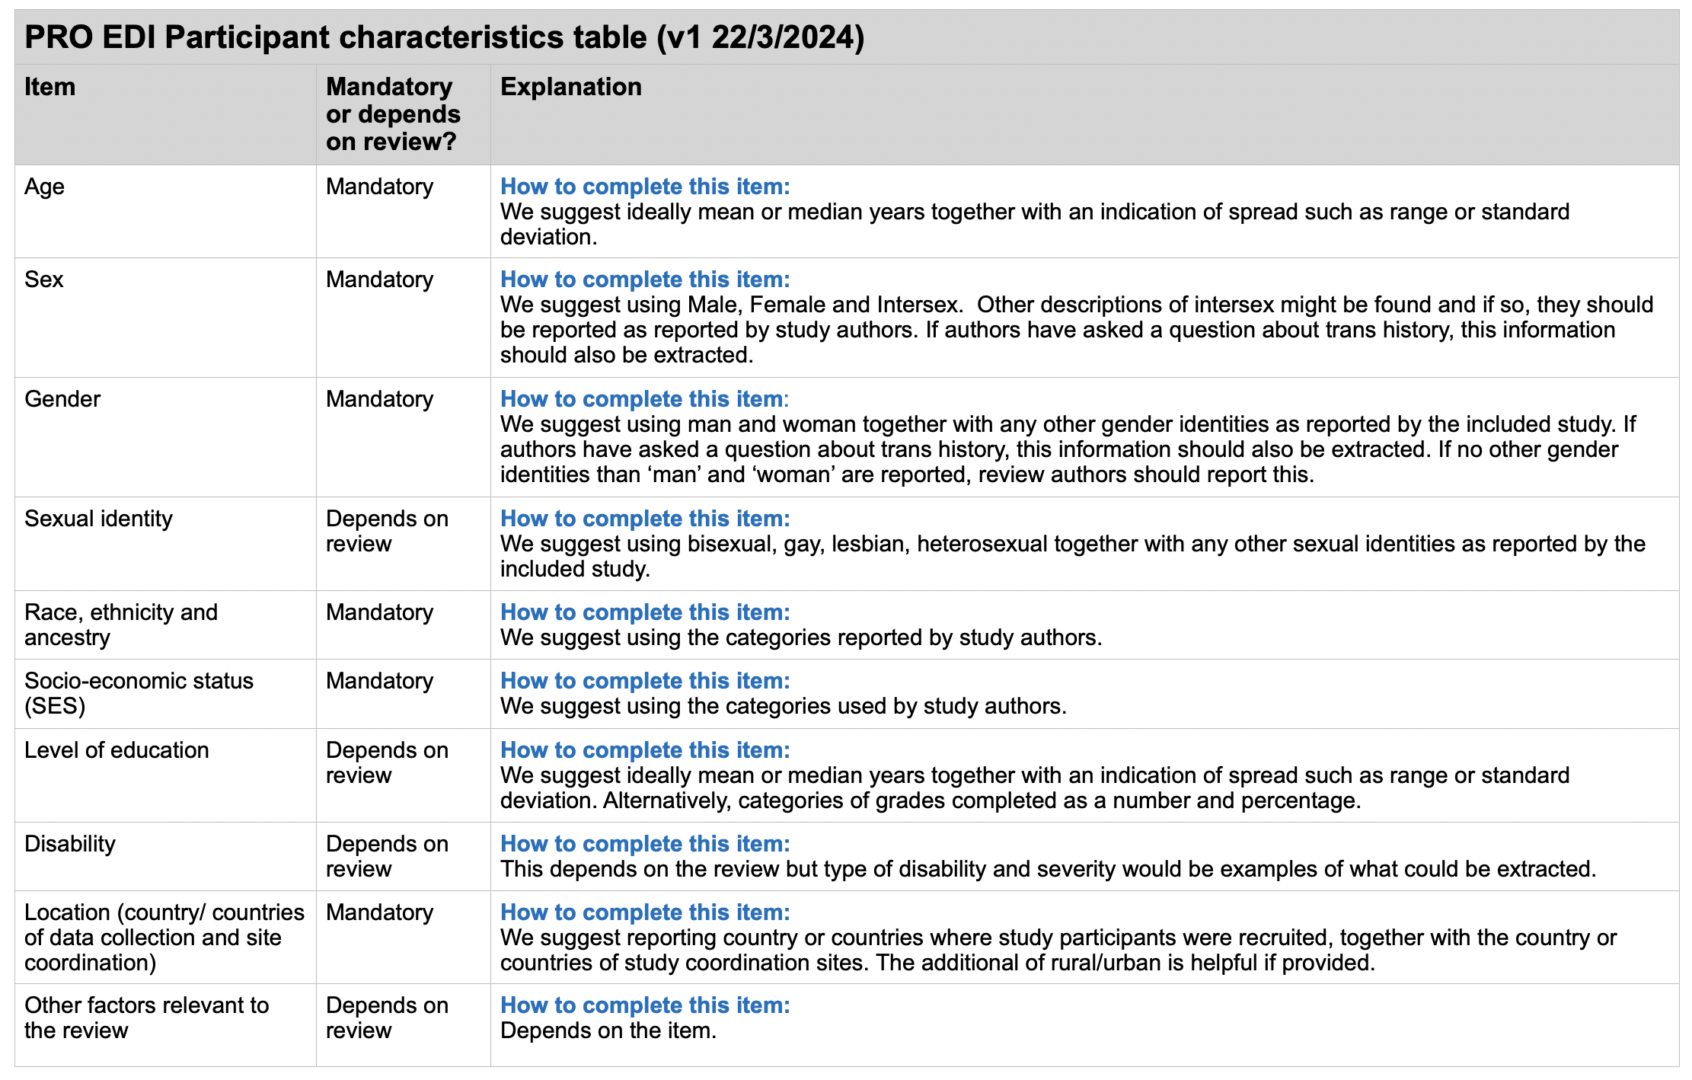 PRO EDI participant characteristics table v1 22/3/2024